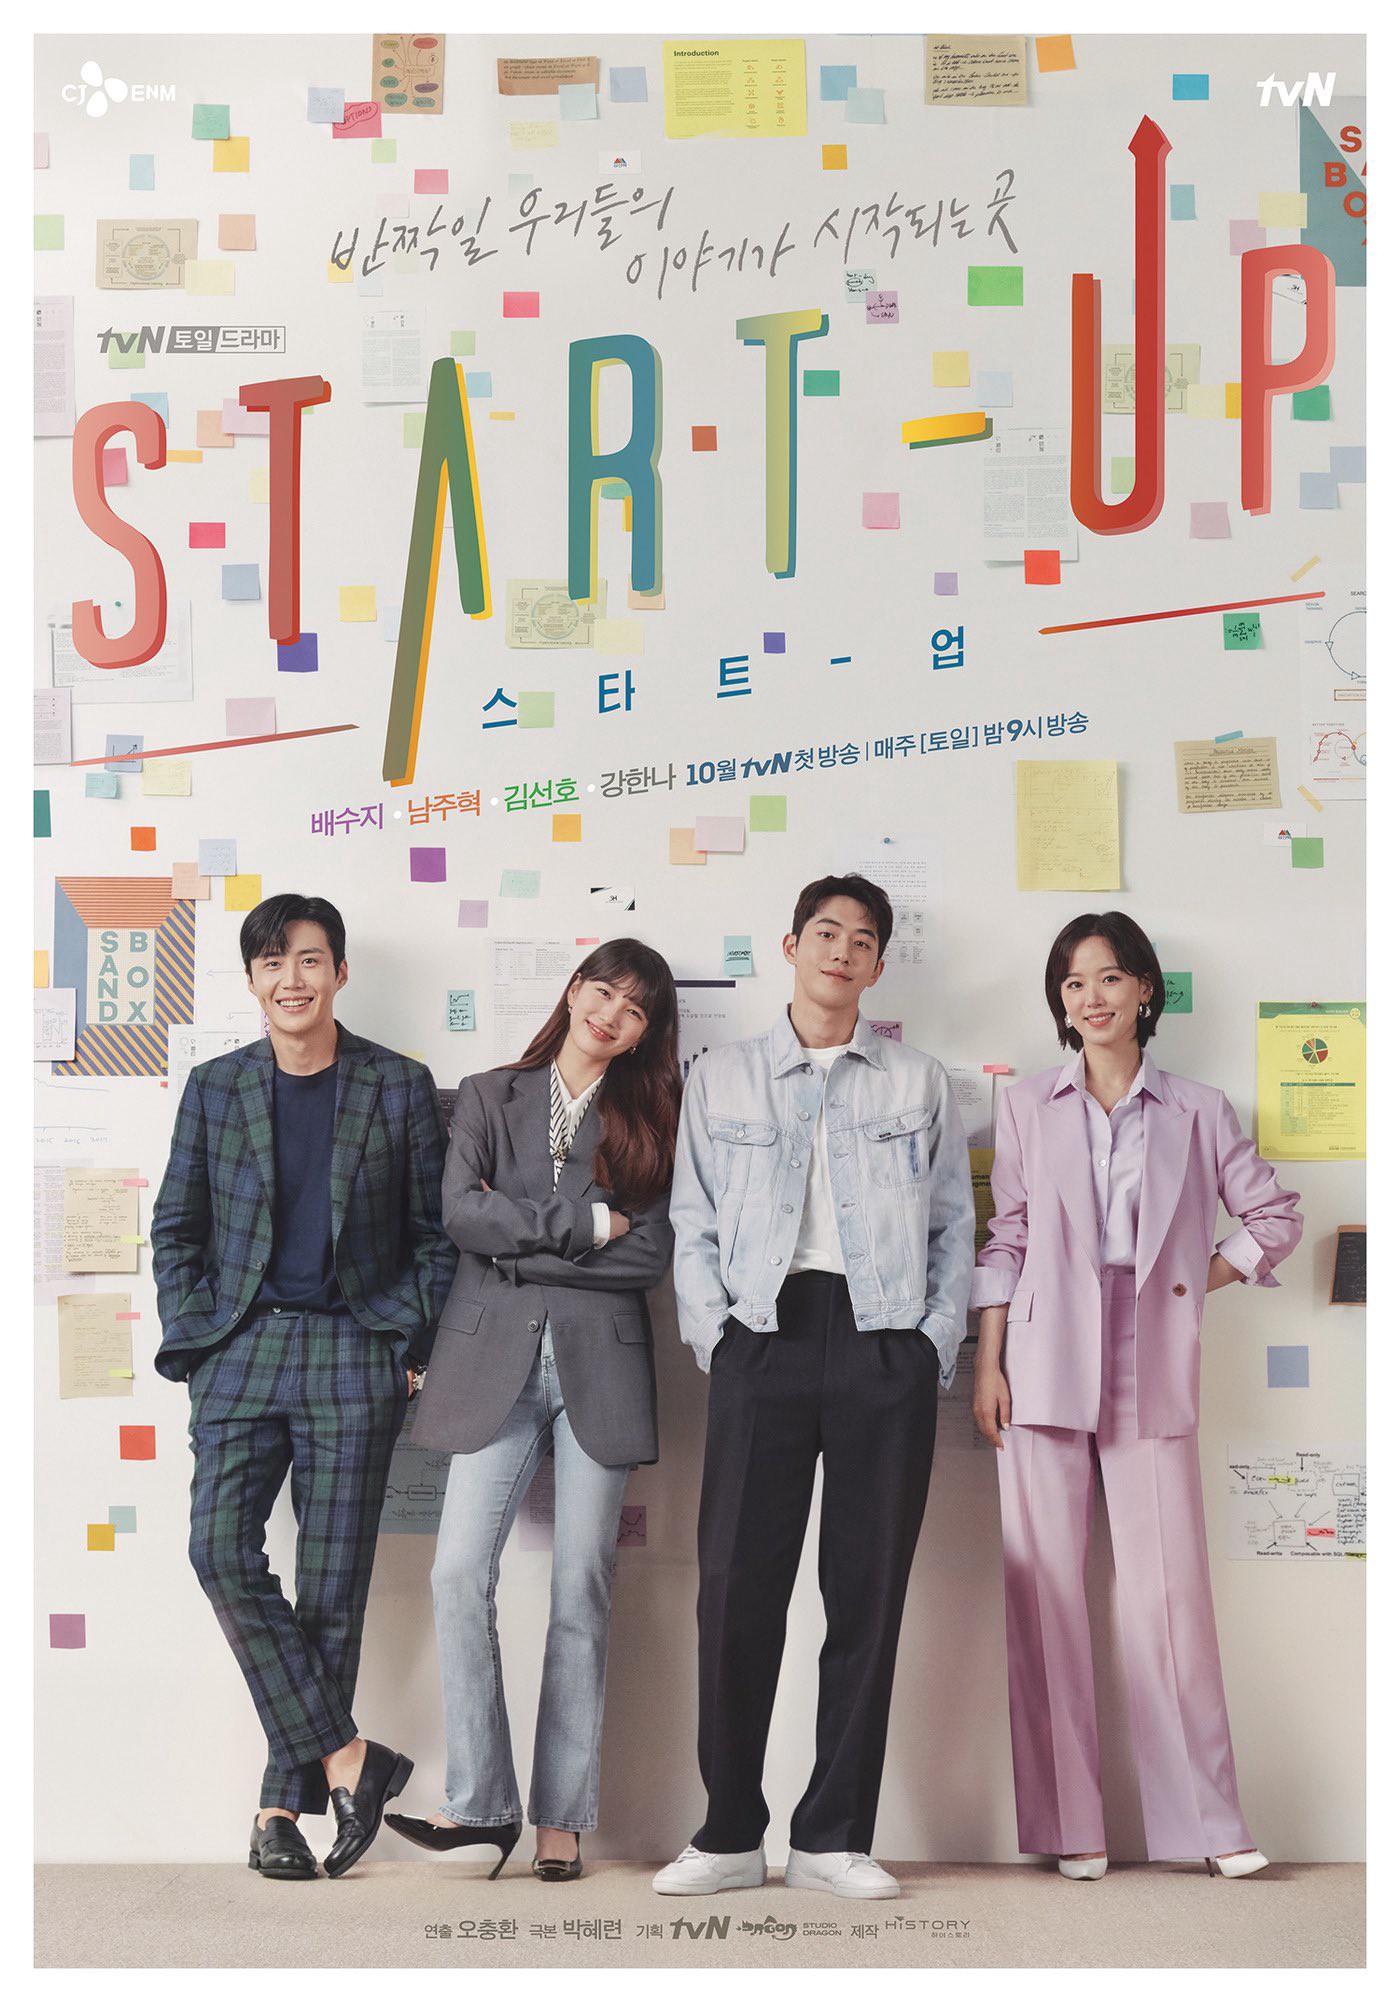 tvn-start-up-announces-3rd-ost-lineup-bae-suzy-apink-jung-eun-ji-kwill-jamie-and-more